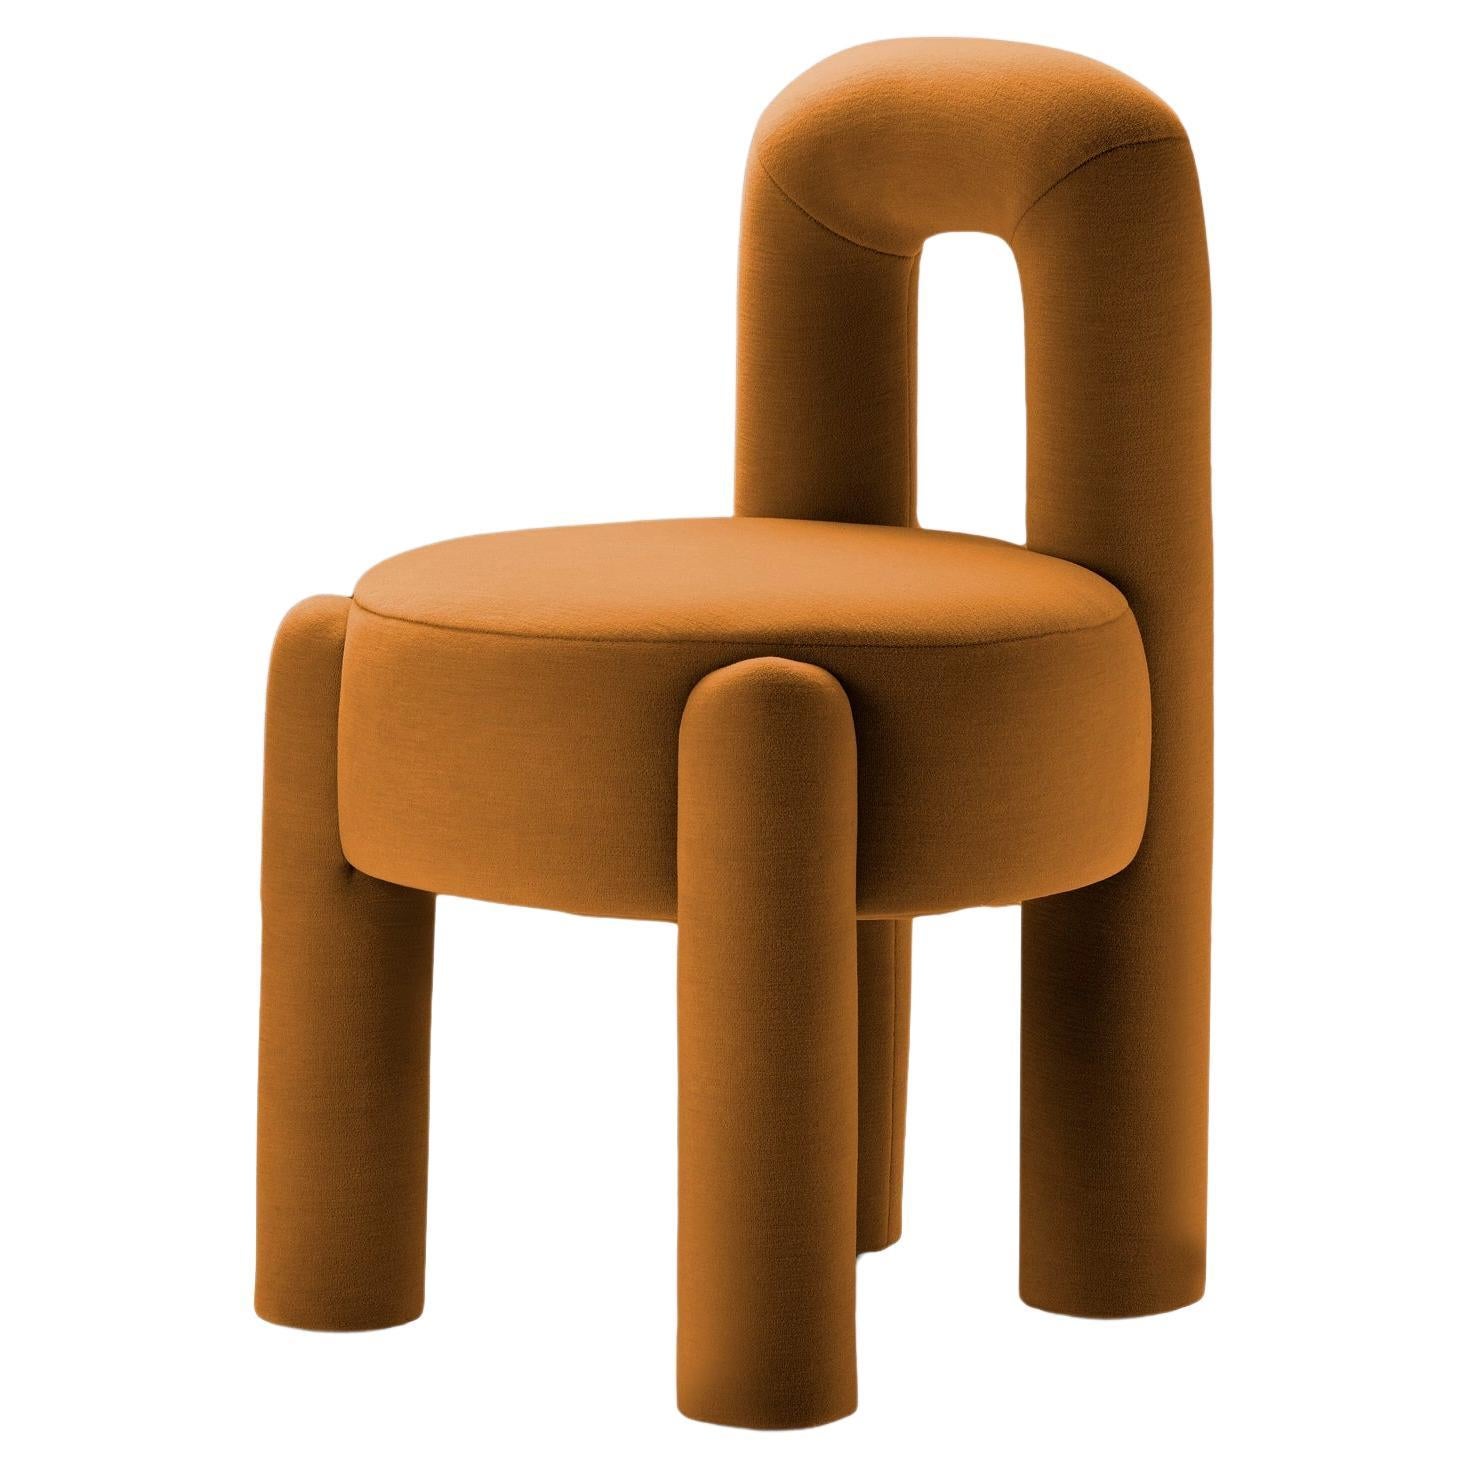 DOOQ! Organic Modern Marlon Chair, Dark Yellow Kvadrat by P.Franceschini For Sale